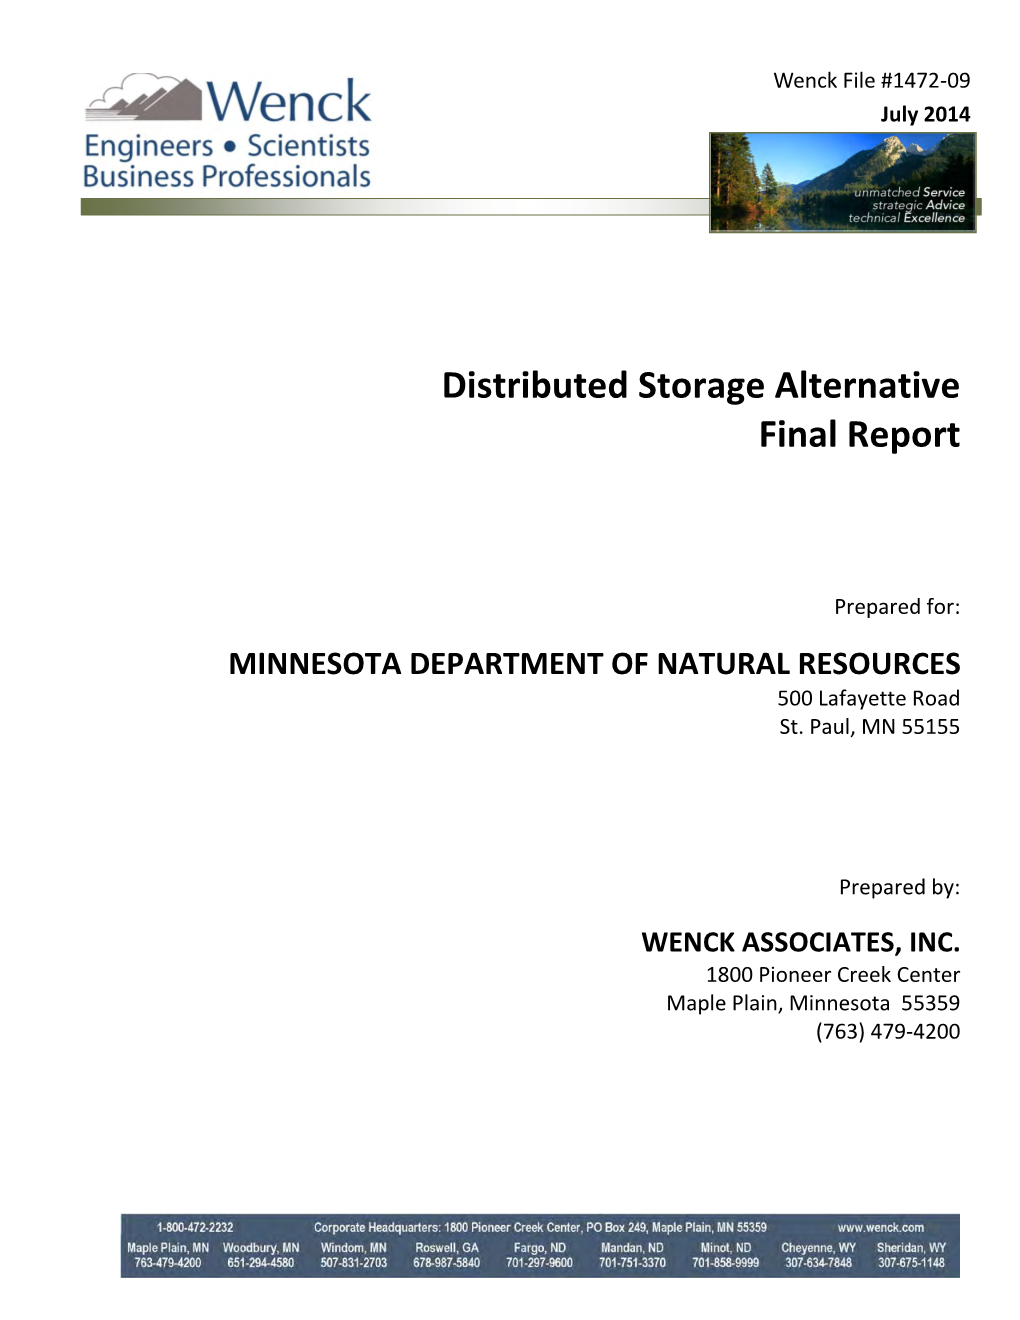 Final Distributed Storage Alternative Report